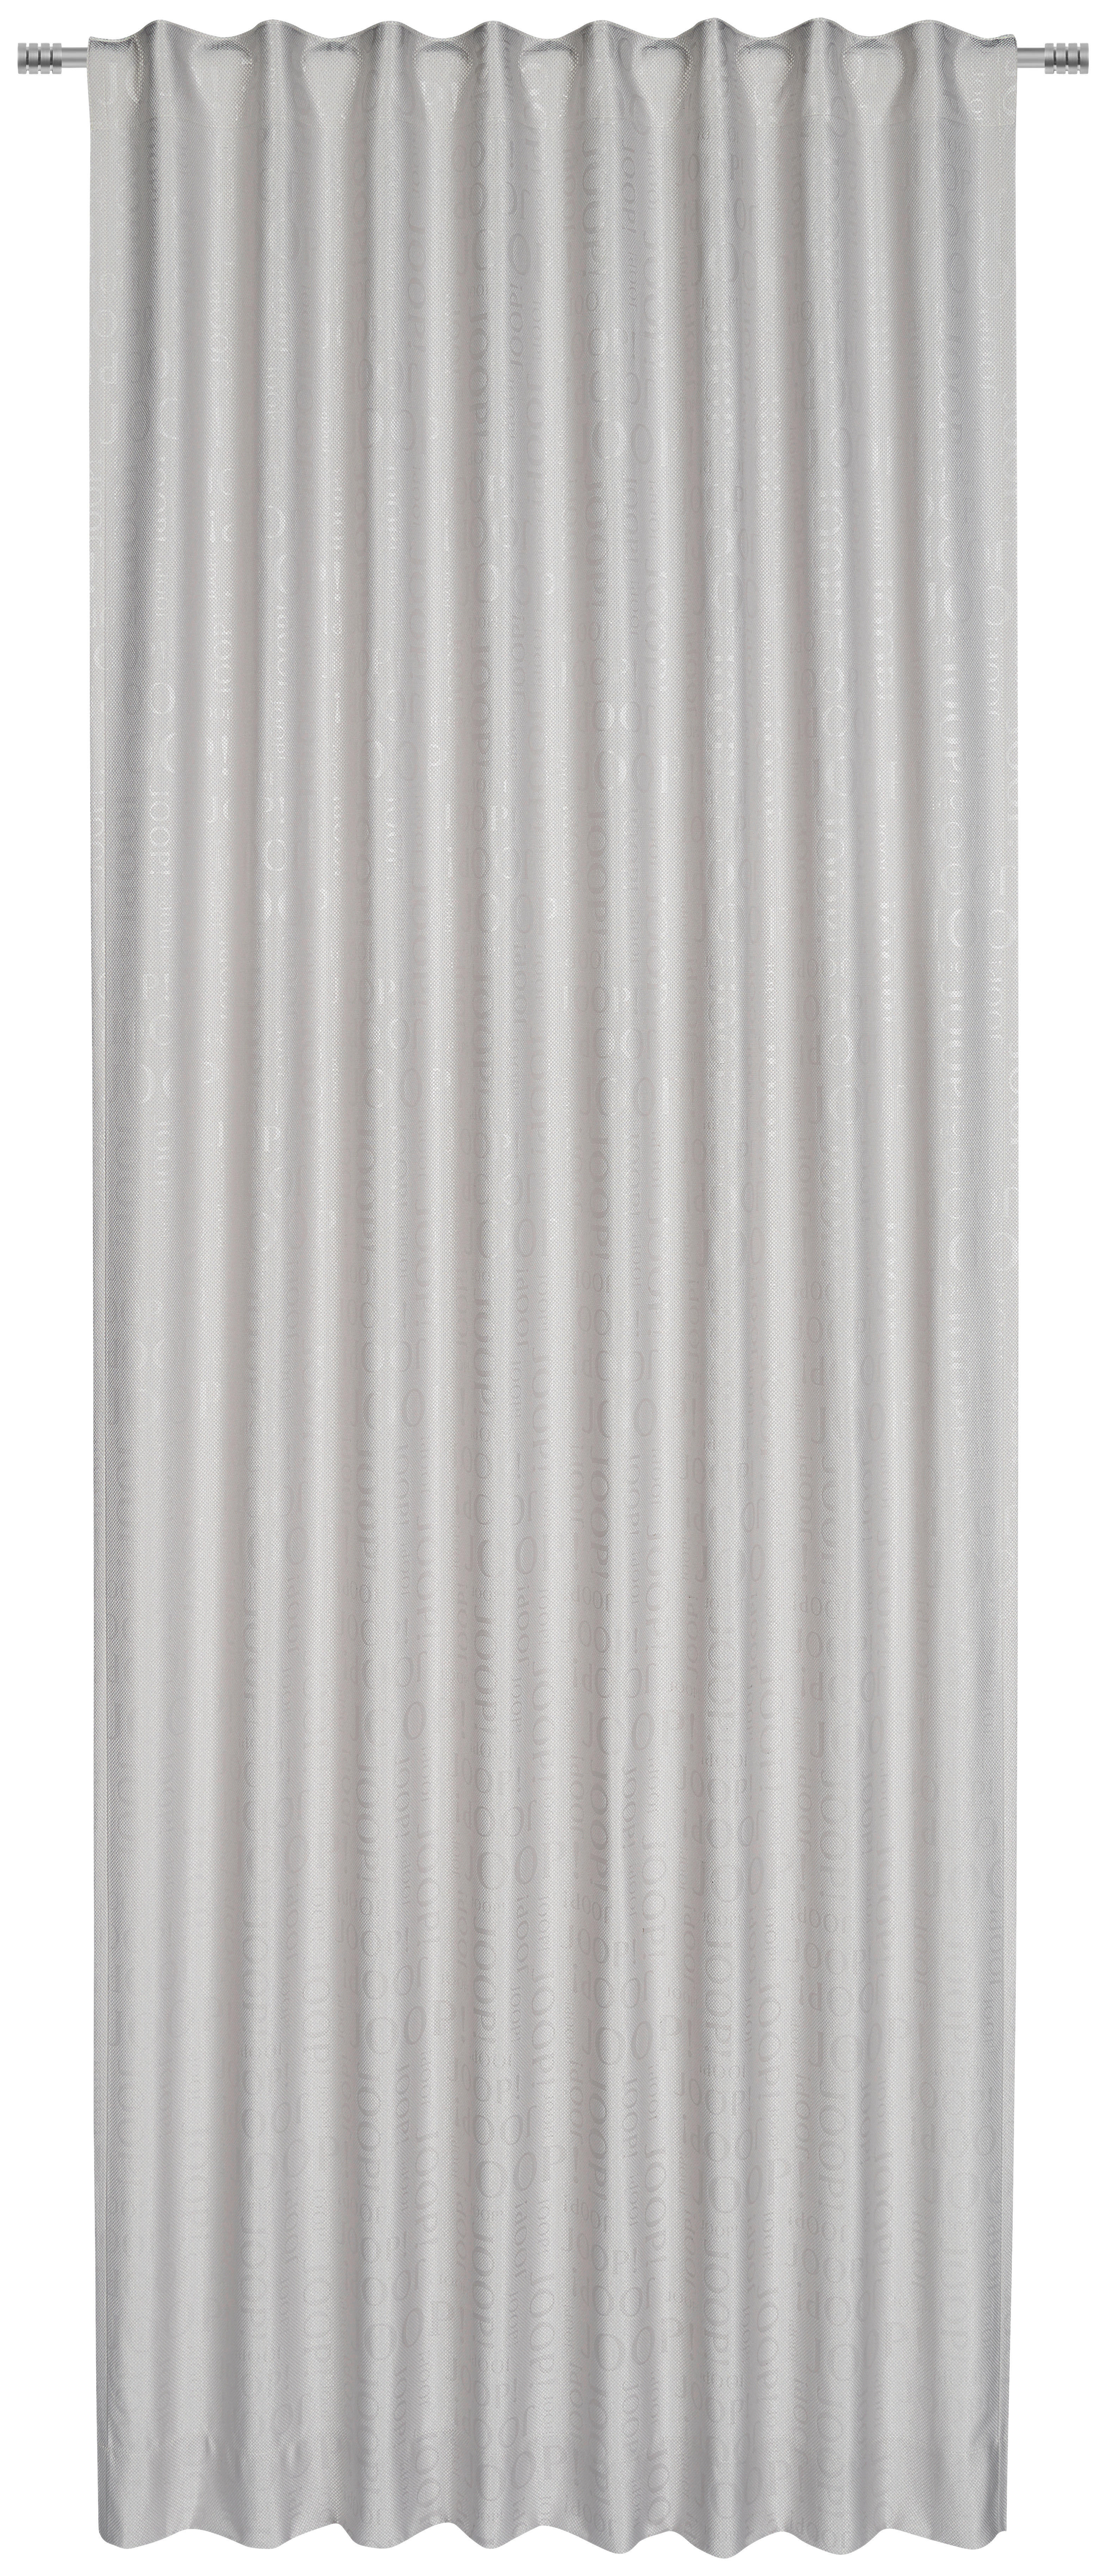 FERTIGVORHANG J-Label blickdicht 130/250 cm   - Silberfarben/Hellgrau, Design, Textil (130/250cm) - Joop!